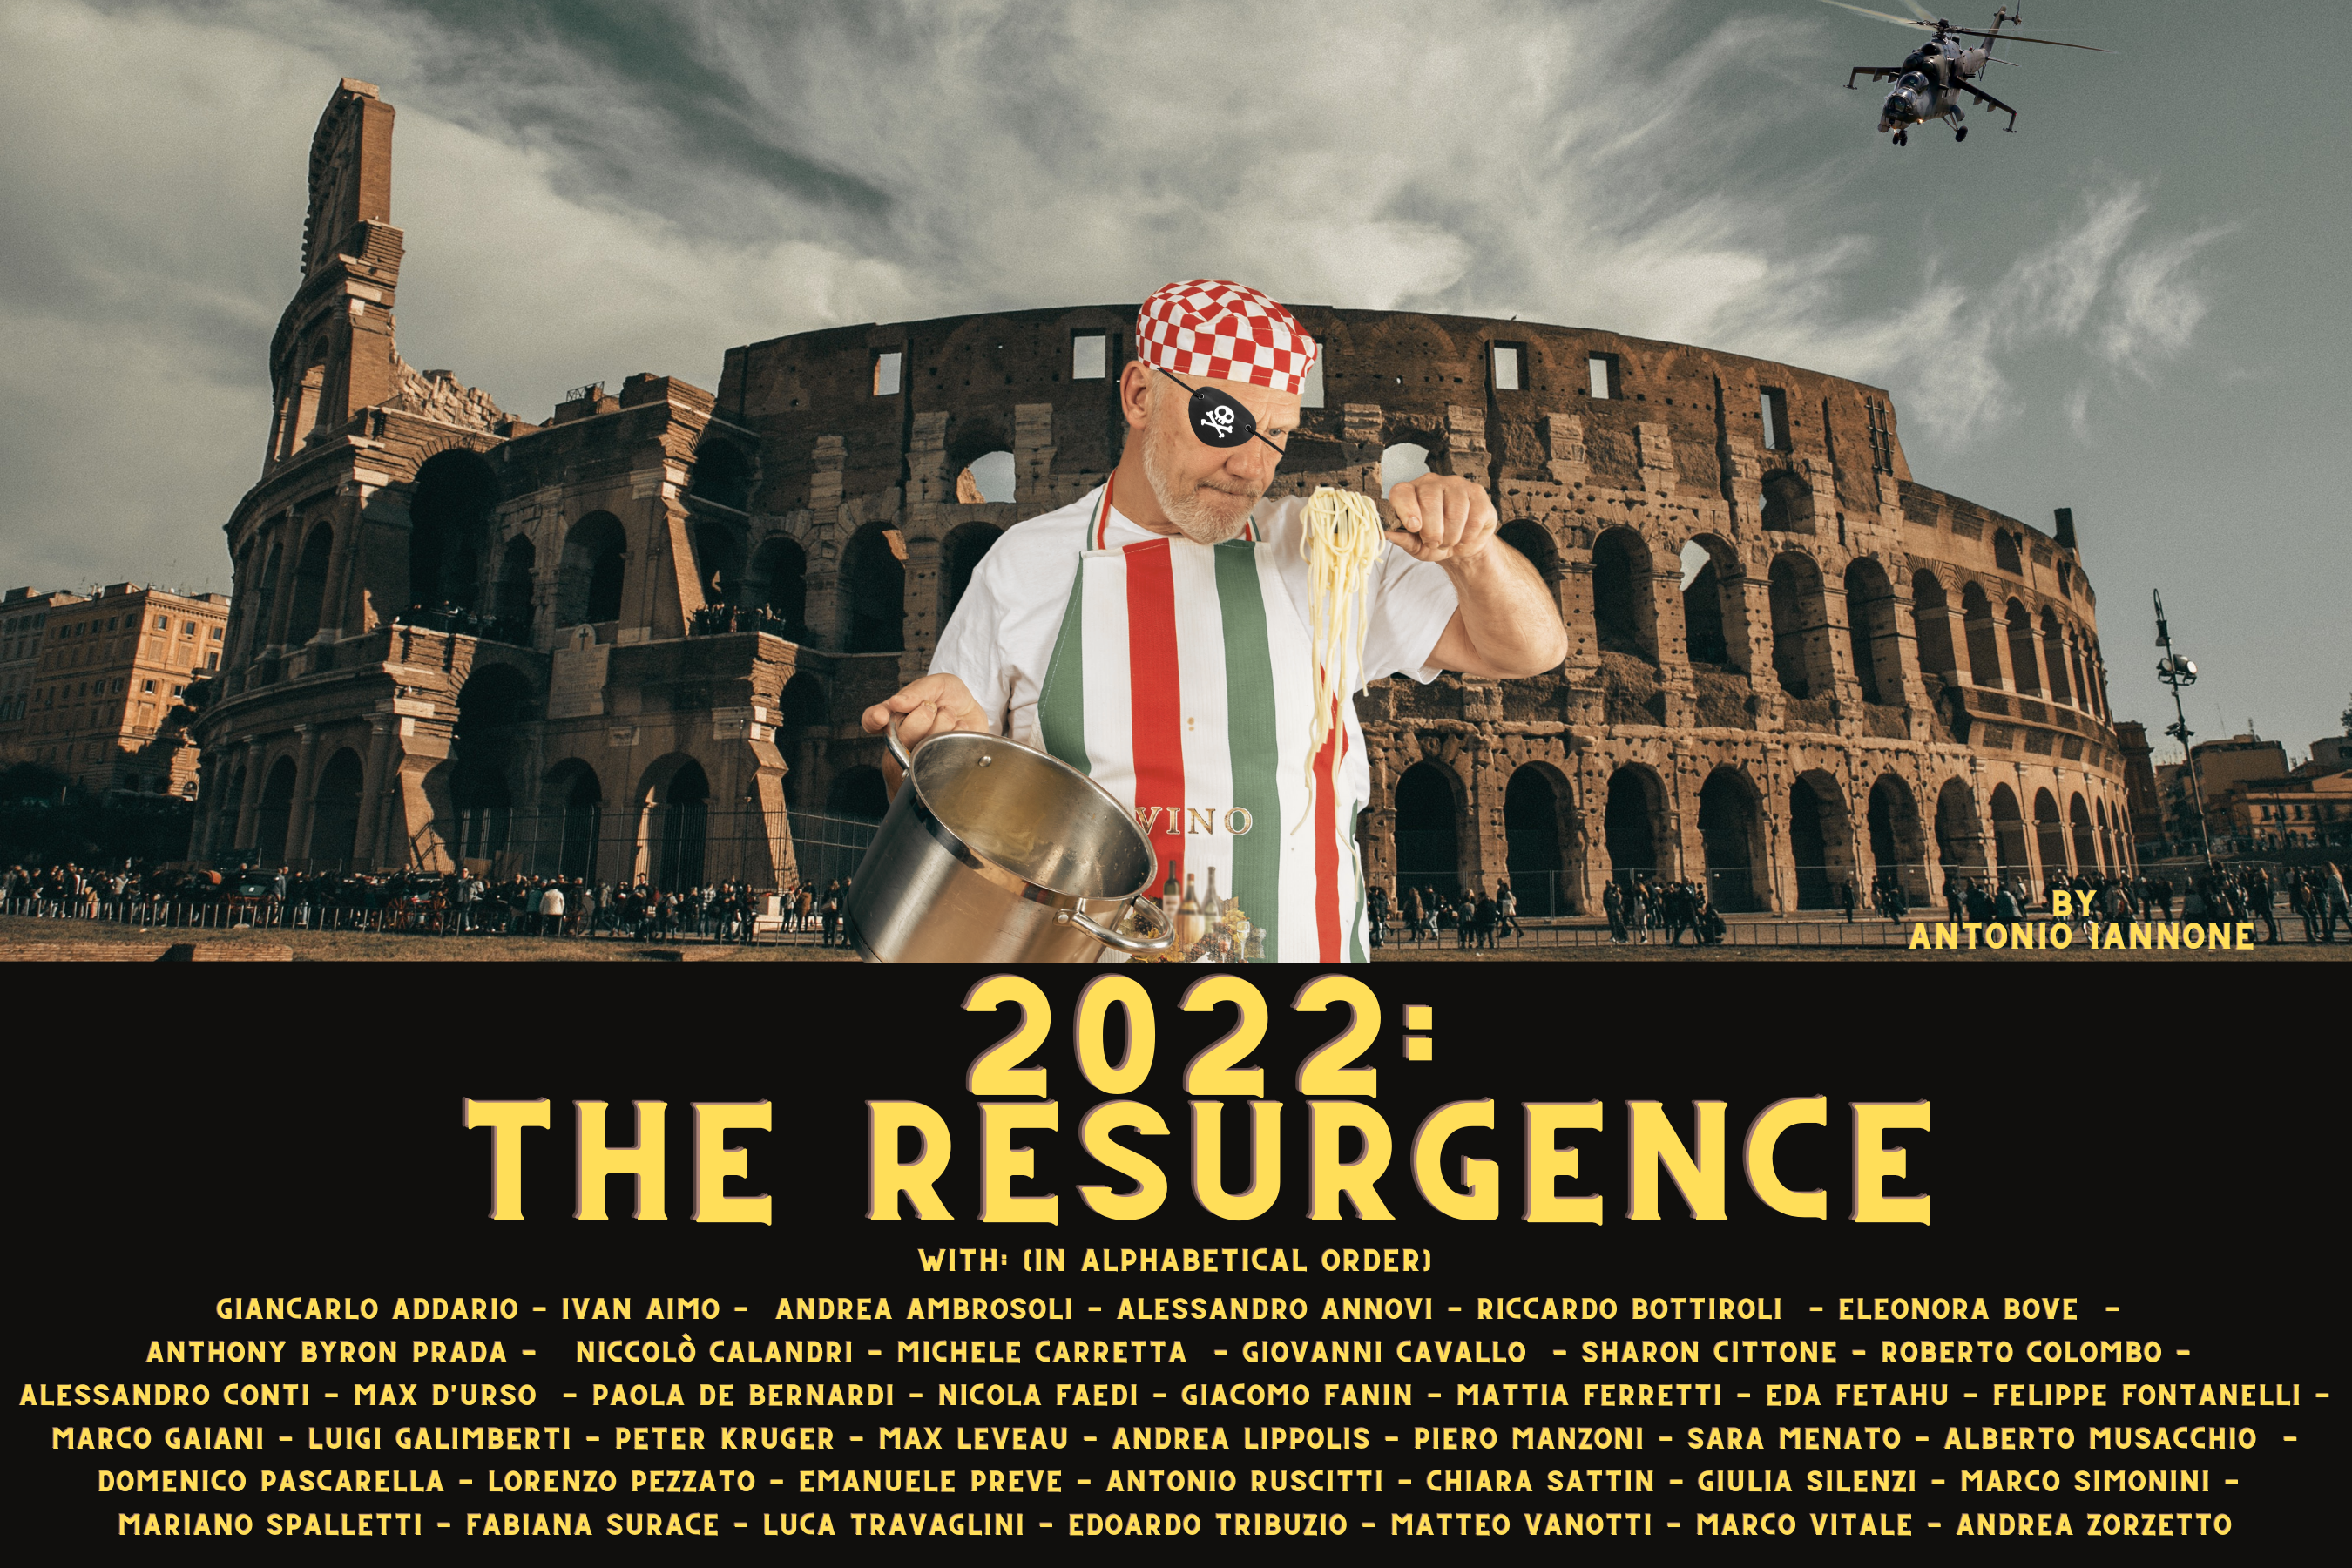 2022: THE RESURGENCE OF ITALIAN FOOD INNOVATION?